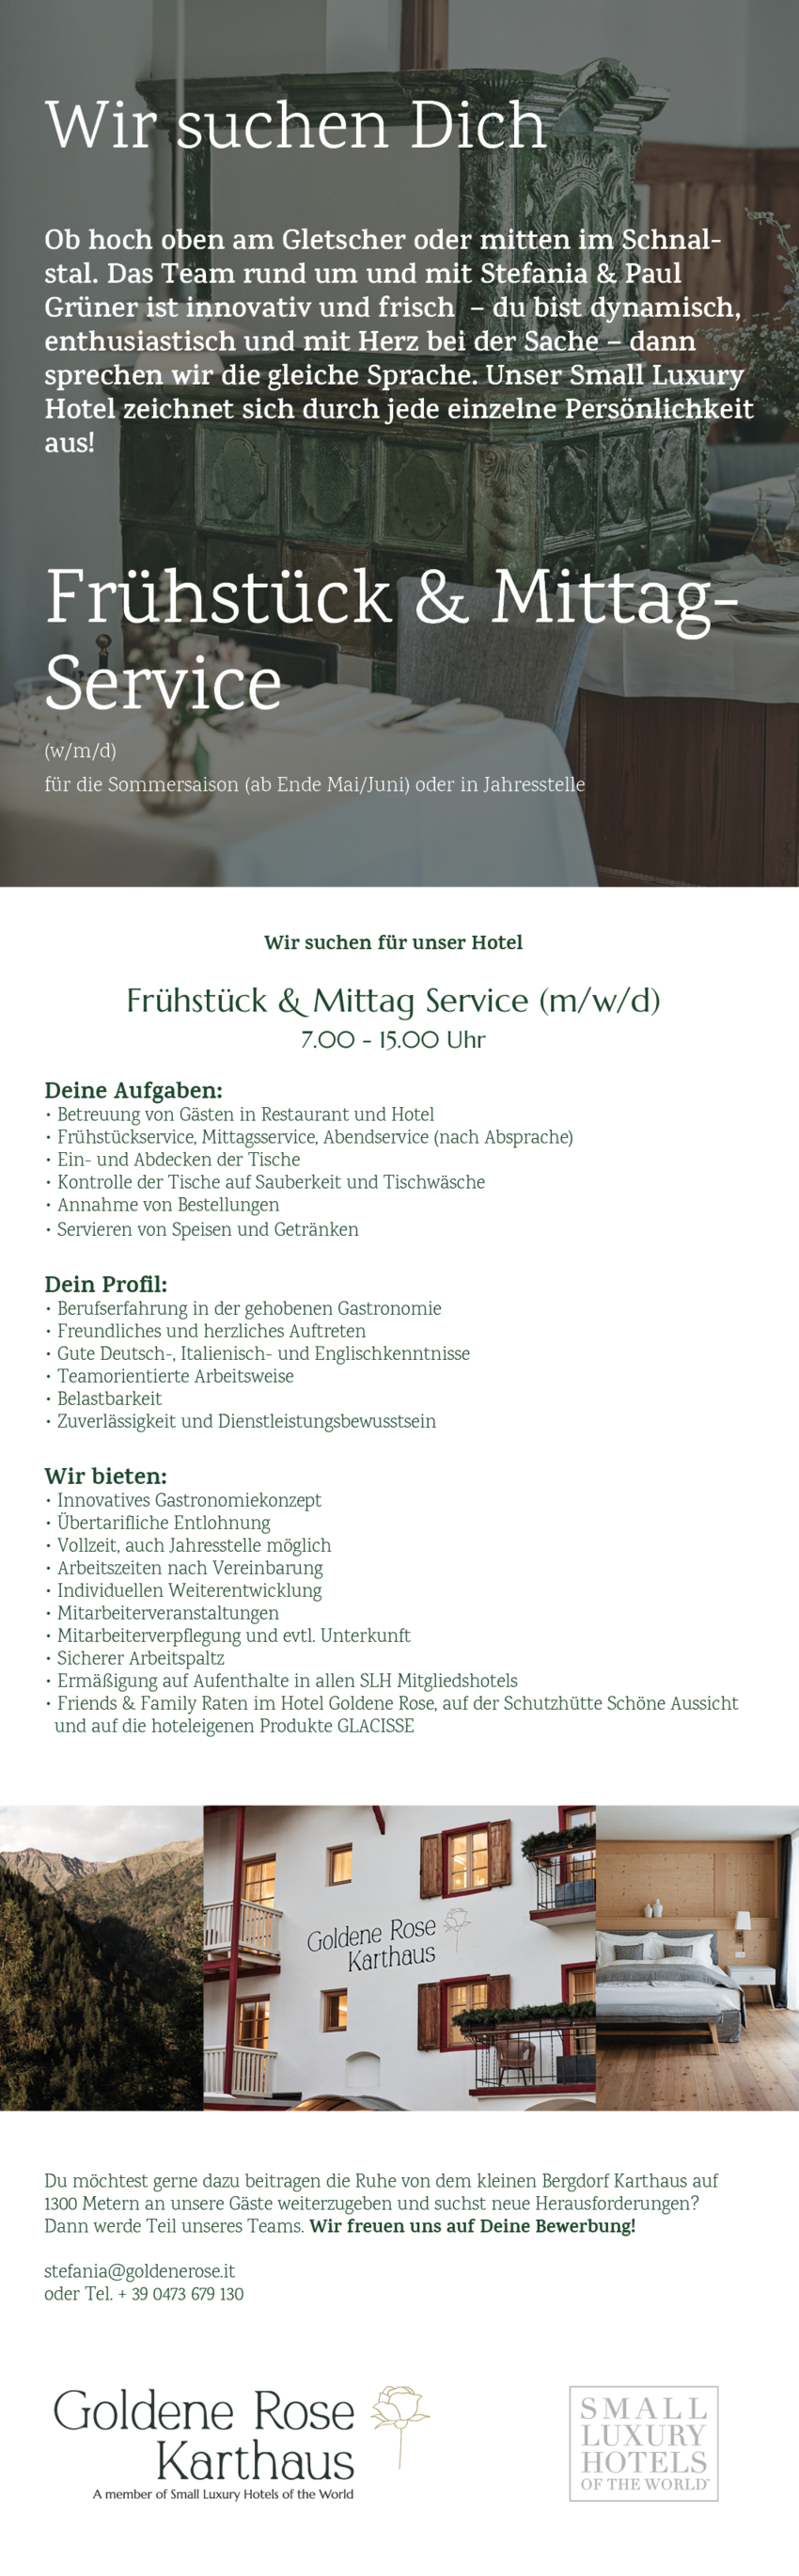 Frühstück & Mittag Service (m/w/d)